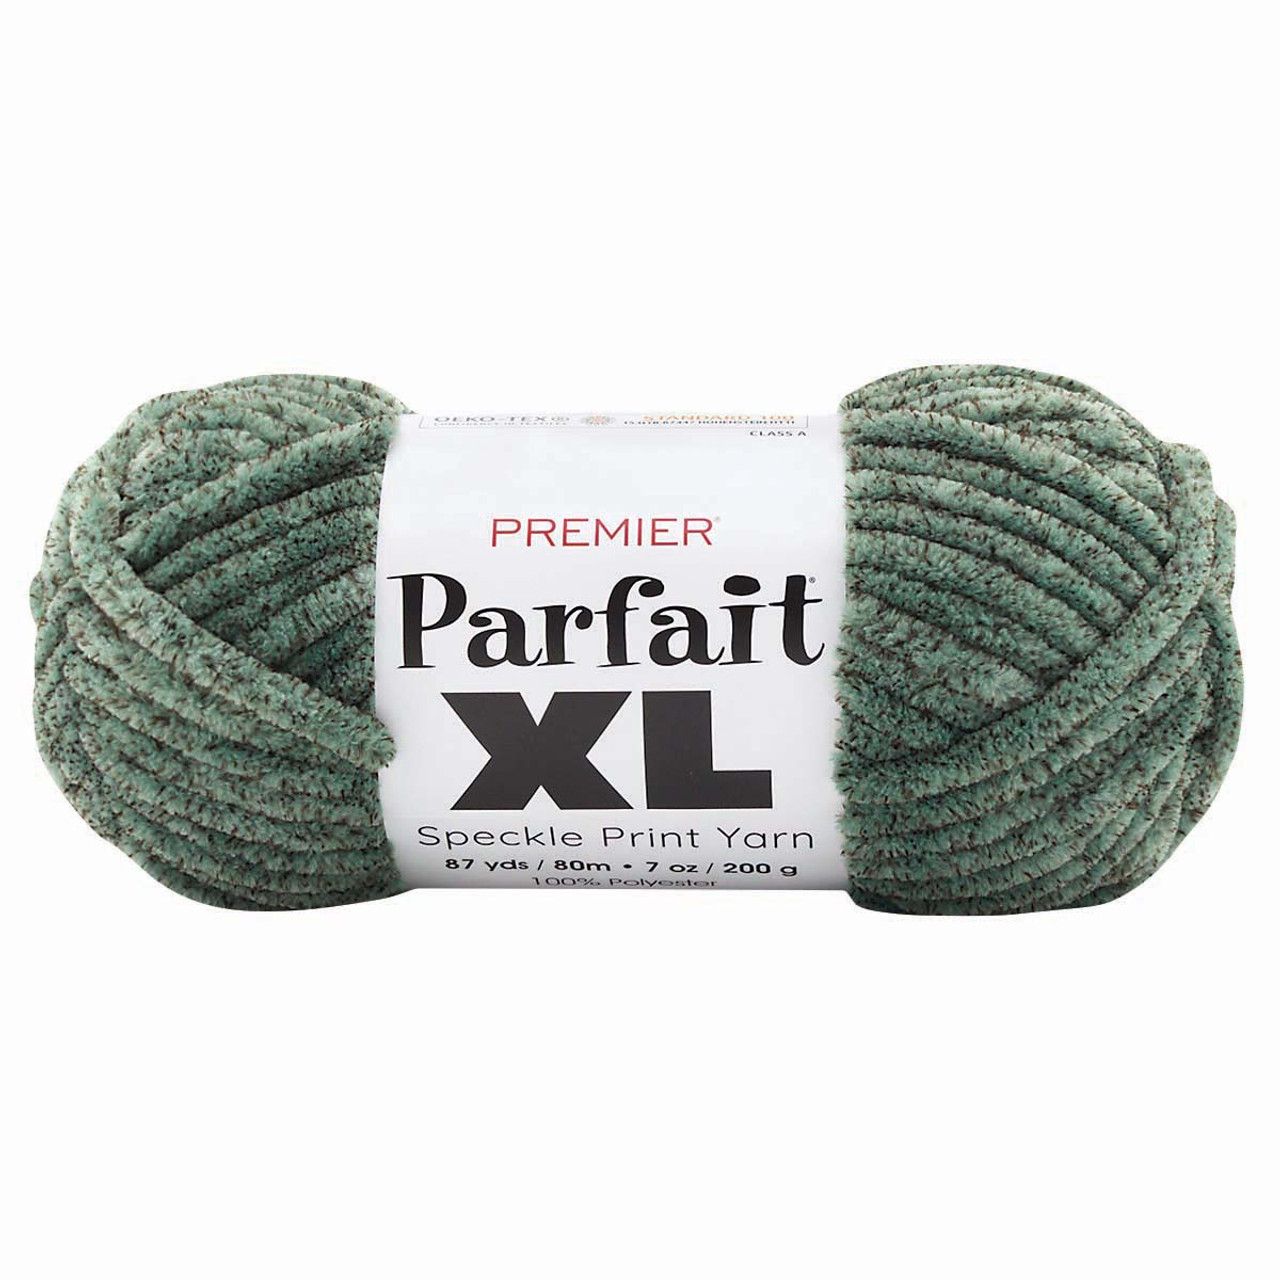 Premier Parfait XL Speckles Yarn